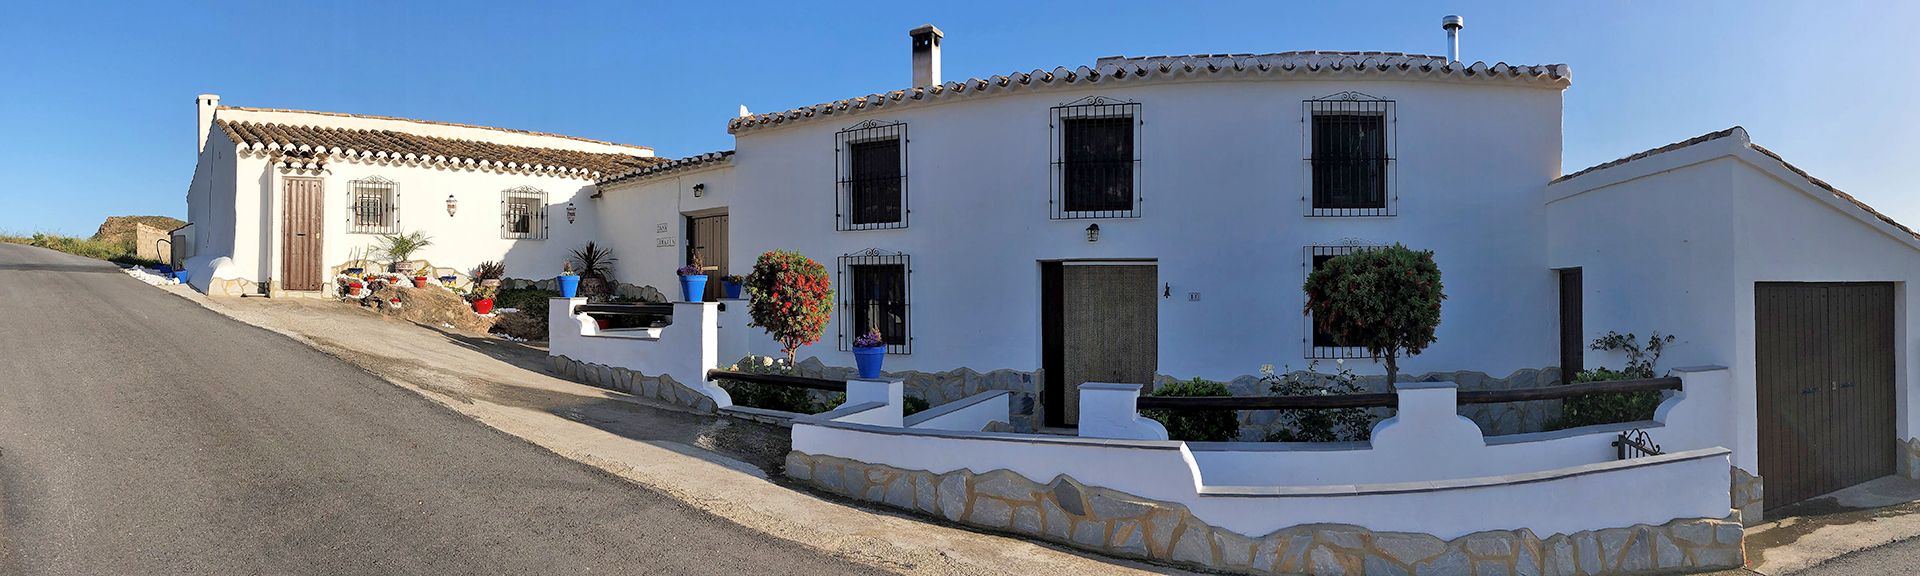 Casa Limaria - Street view